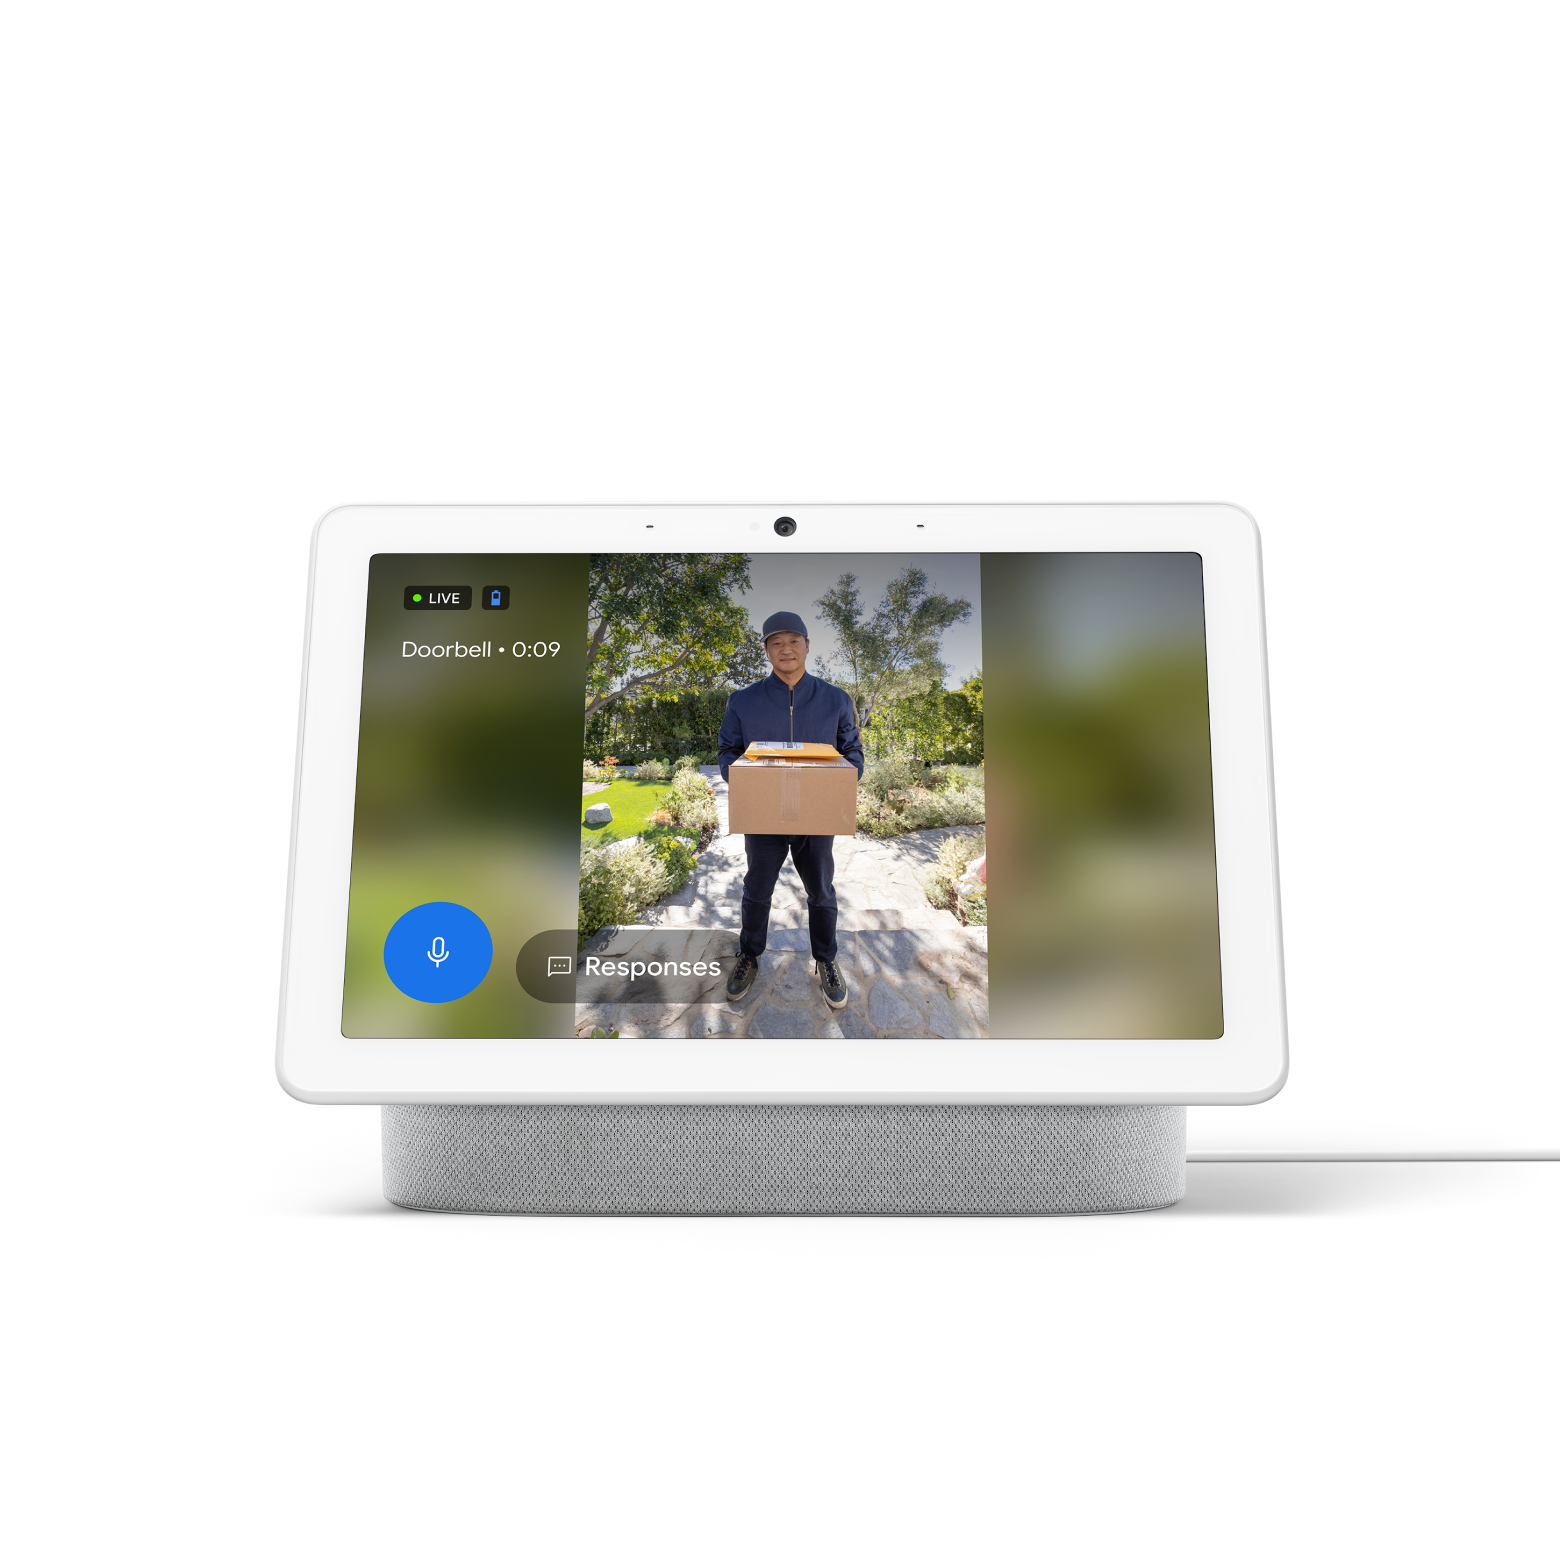 Google Nest Hub Max | Smart Home Display | ADT.com®